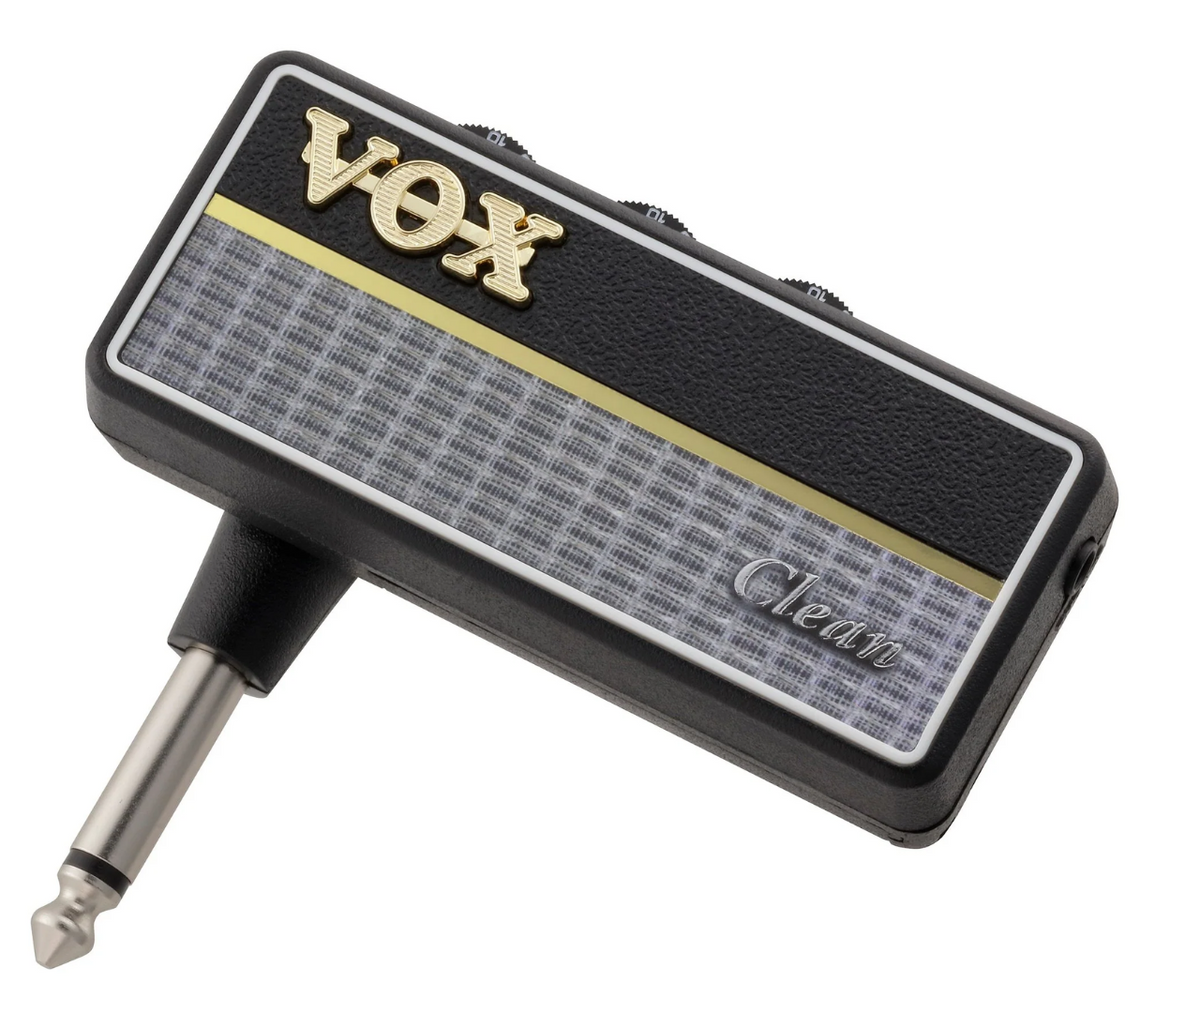 VOX AP2CL – Amplug 2 Clean Guitar Amplifier Headphones Ideal Choice for Fat, Boutique Inspired Clean Sounds